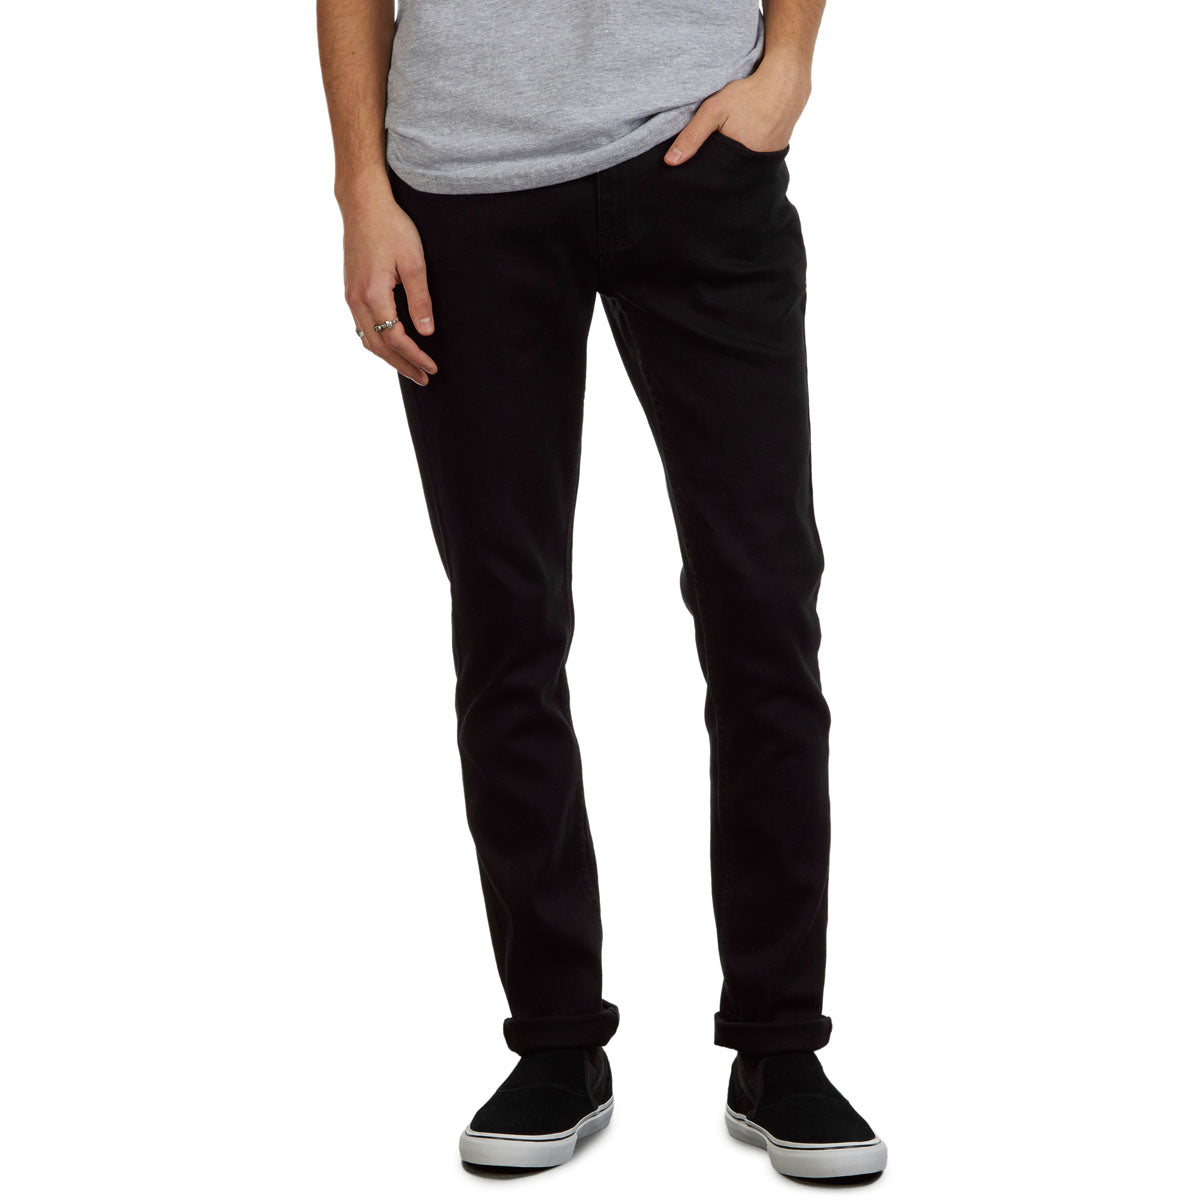 CCS Standard Plus Skinny Denim Jeans - Overdyed Black image 4